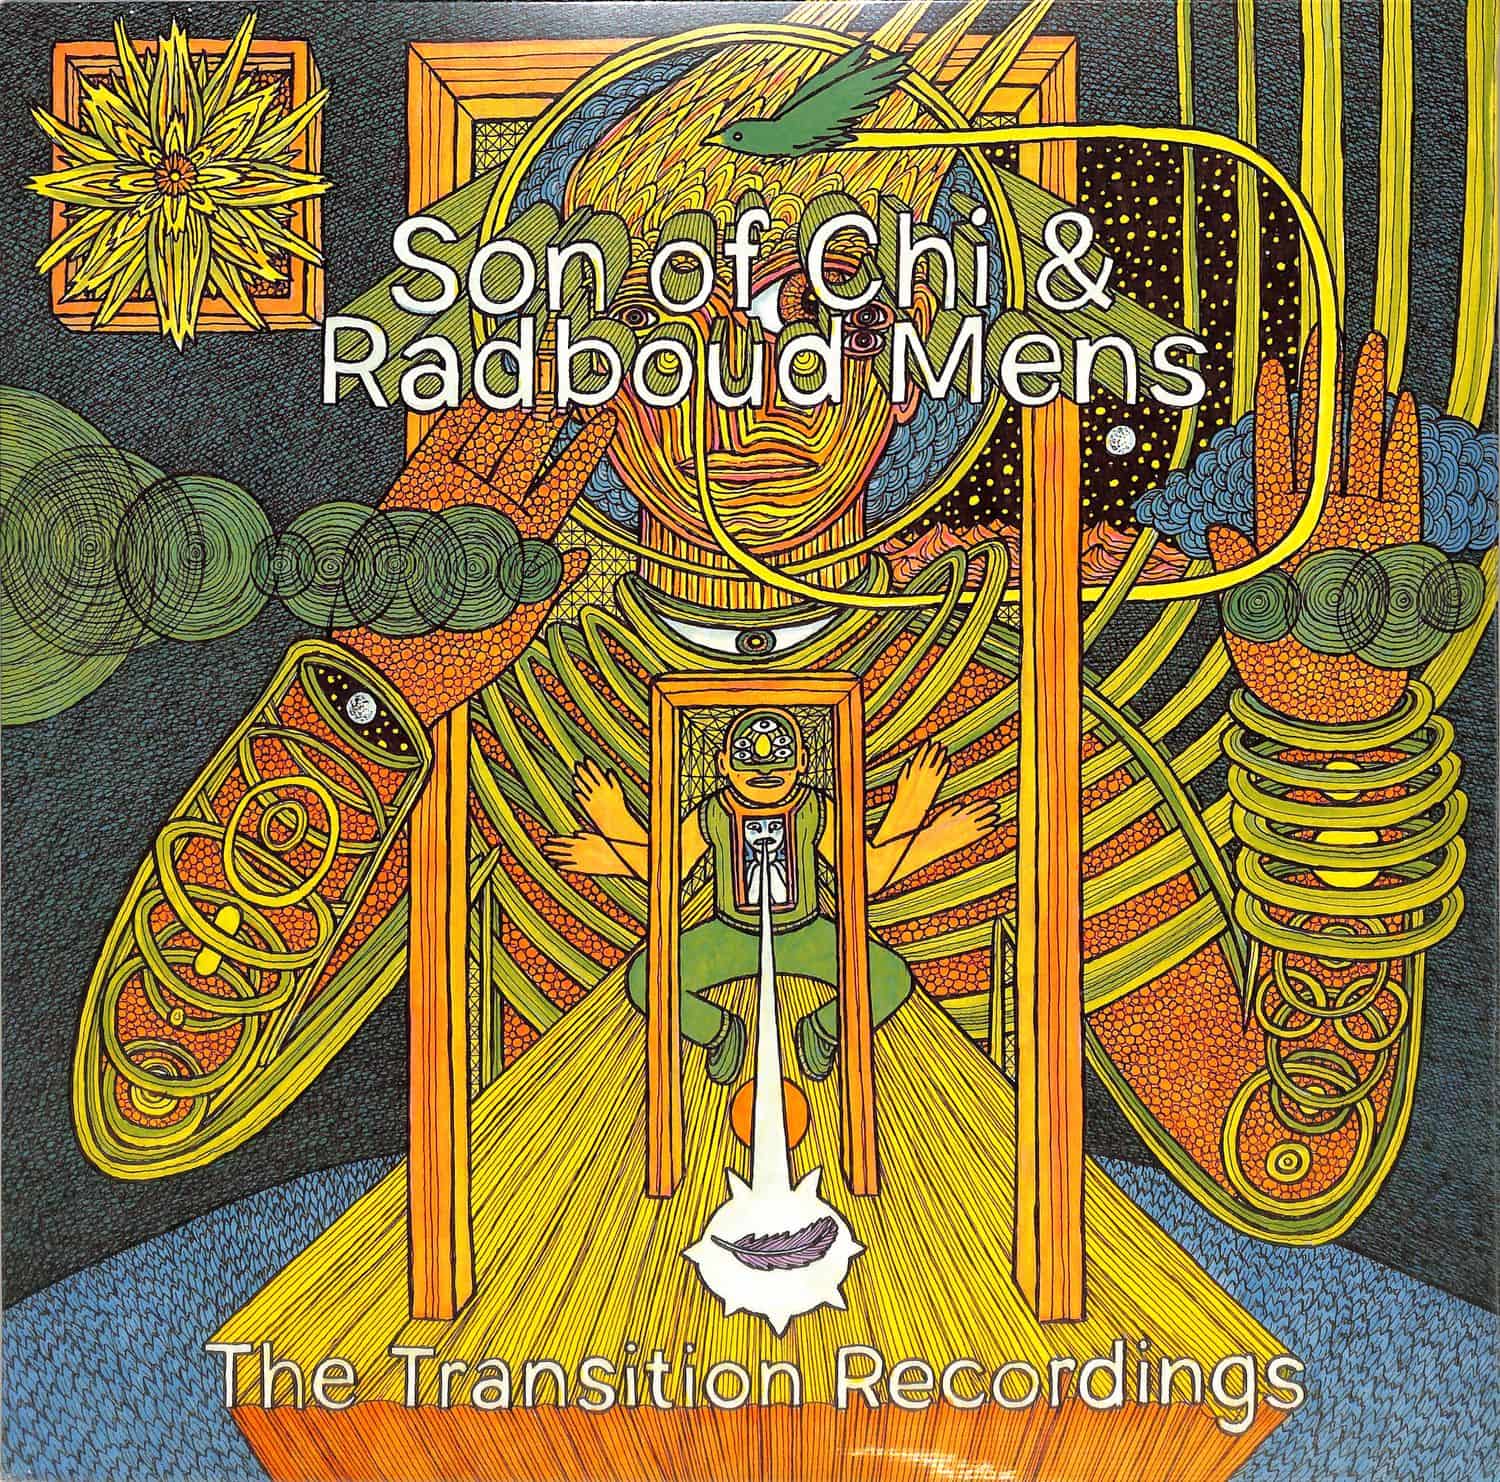 Son of Chi & Radboud Mens - THE TRANSITION RECORDINGS 